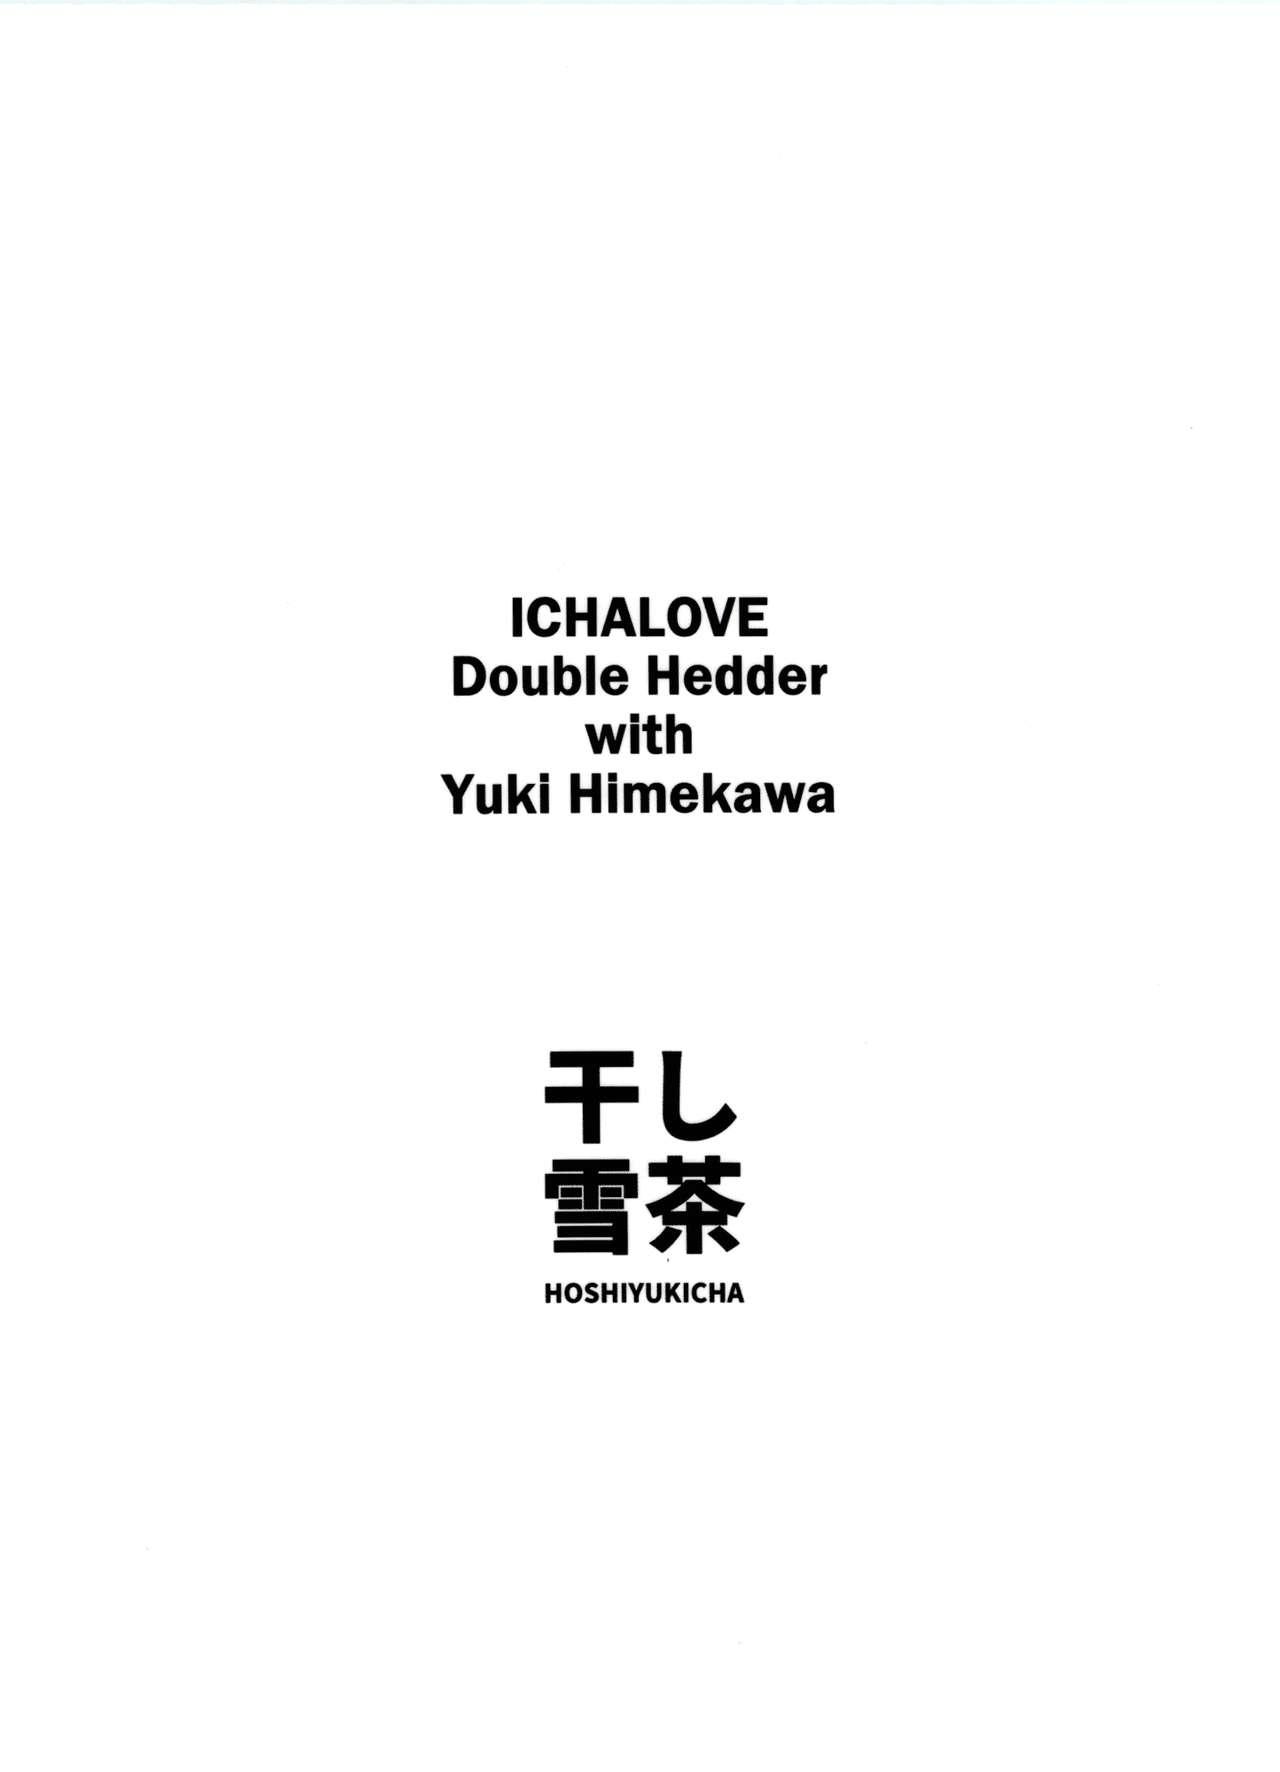 Himekawa Yuki to ICHALOVE Double Hedder 30